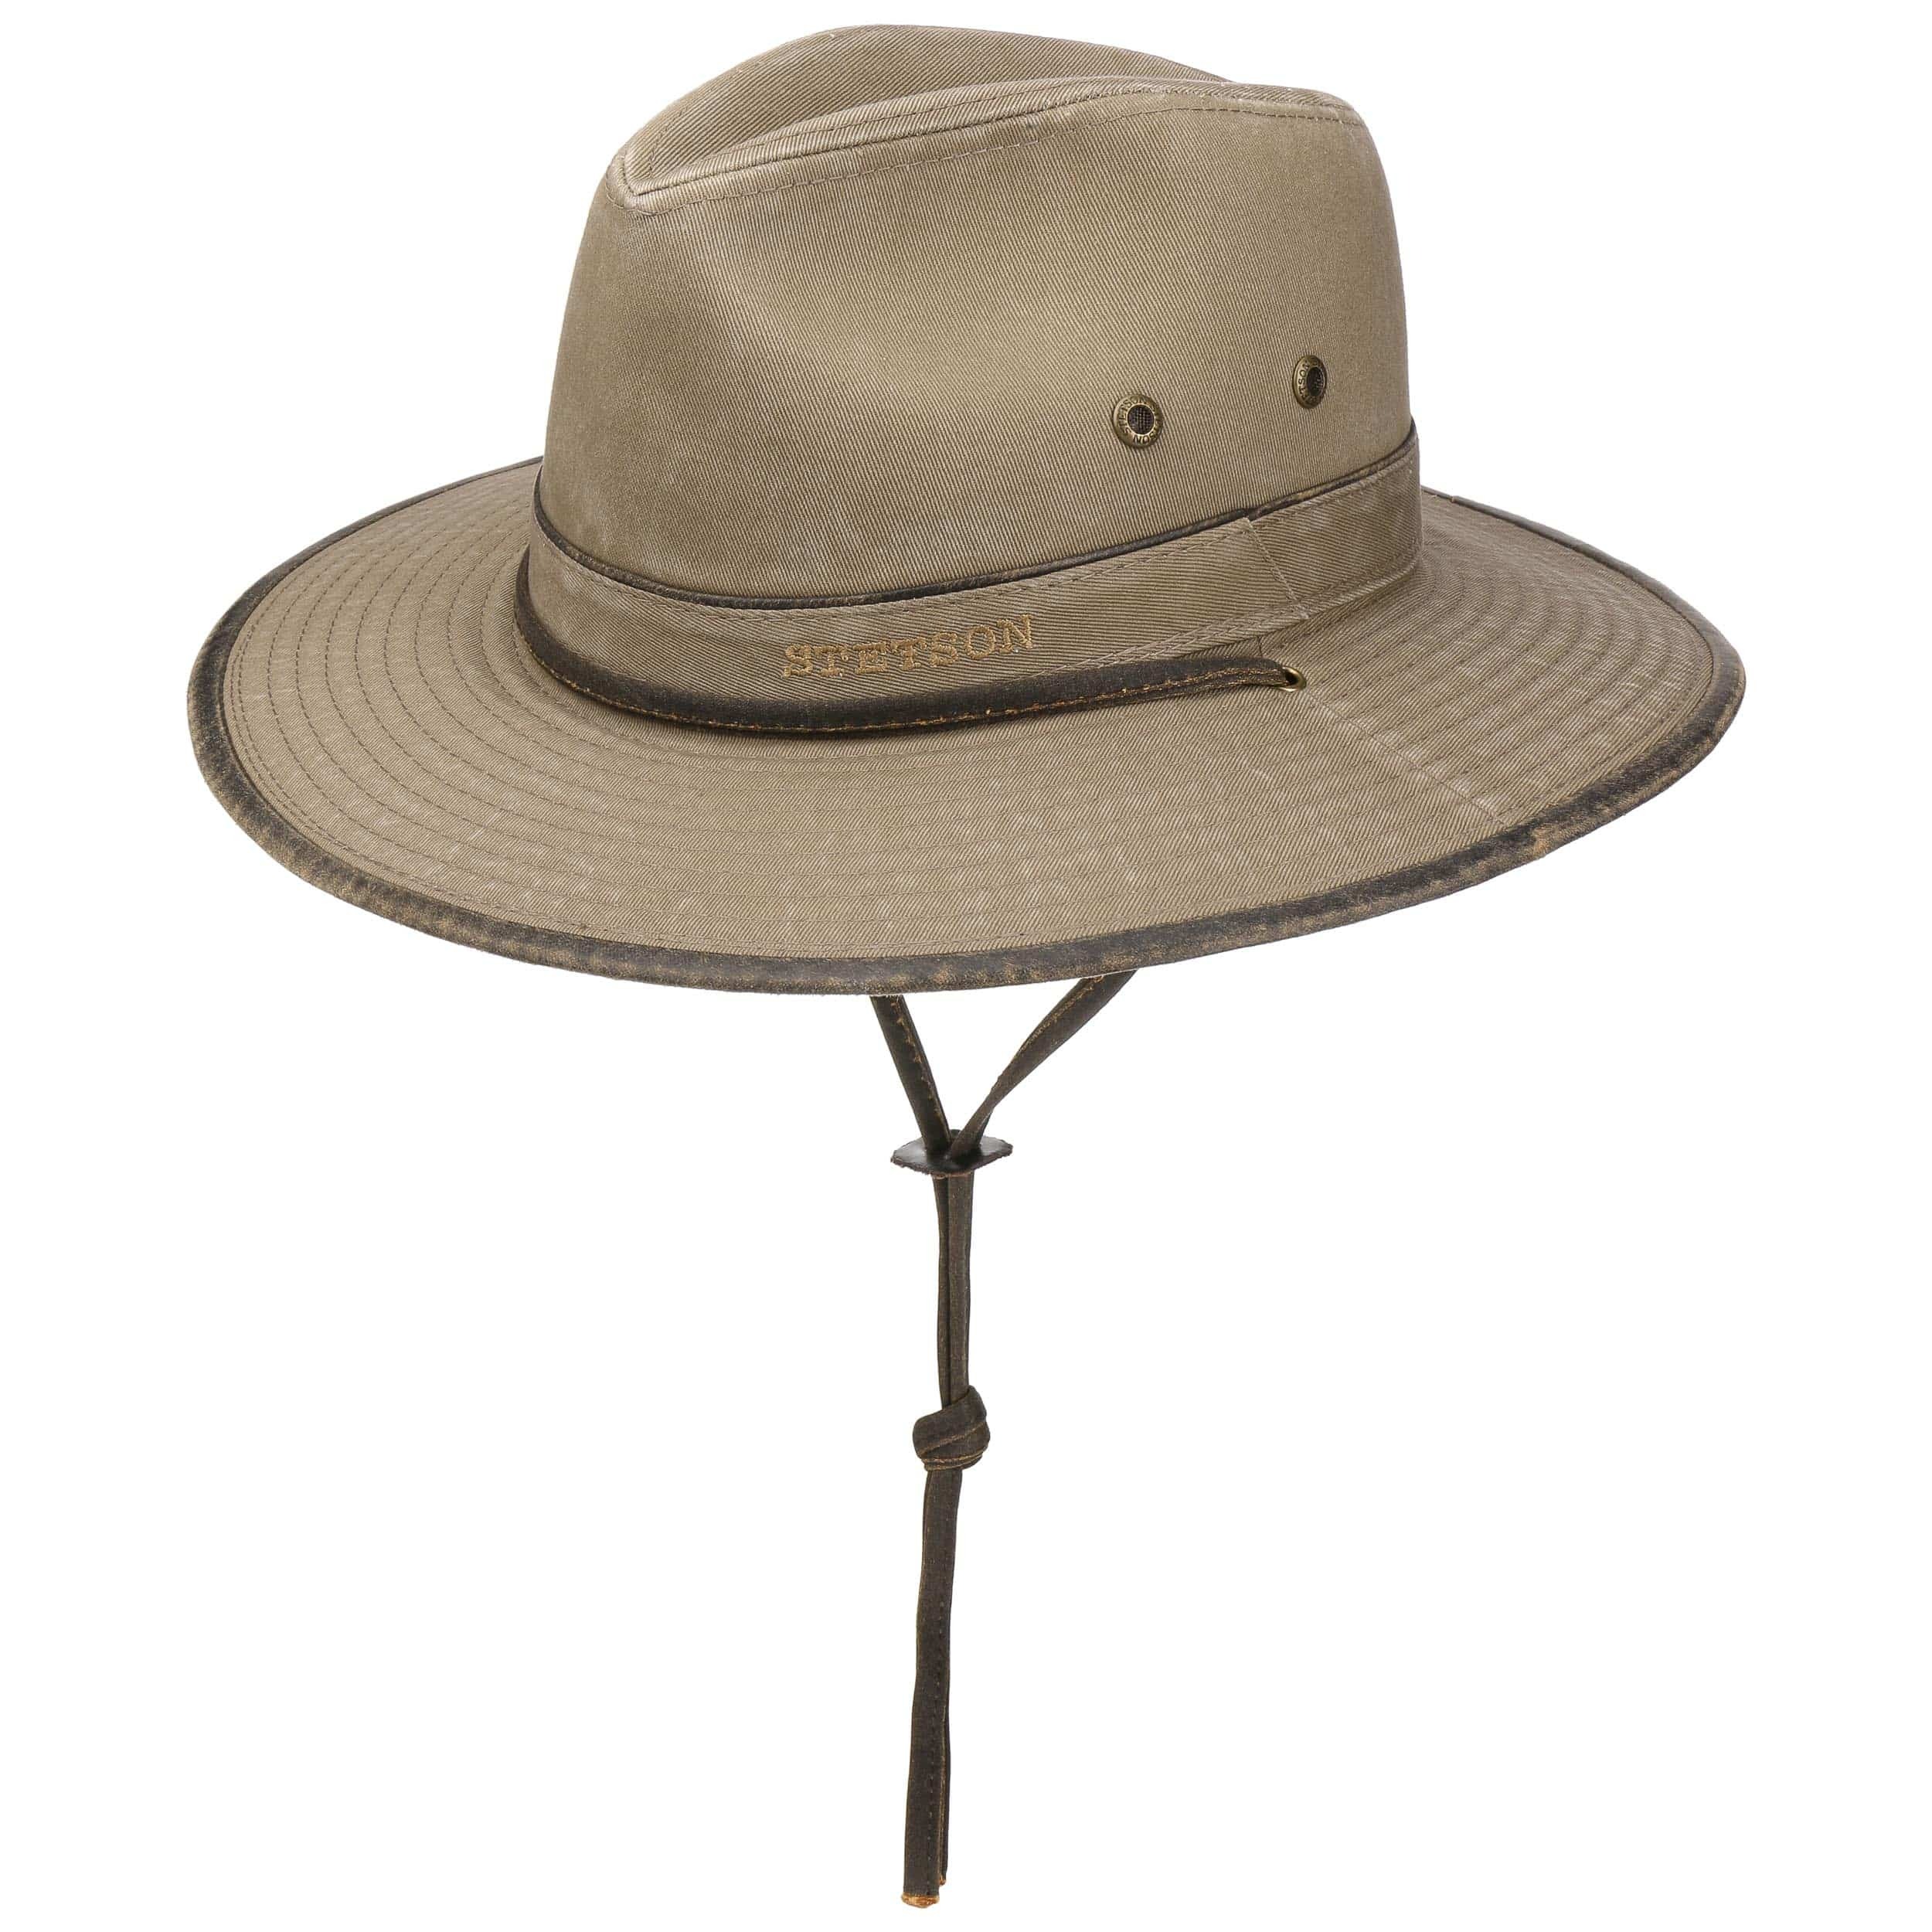 Tarnell Traveller Cotton Hat by Stetson - 59,00